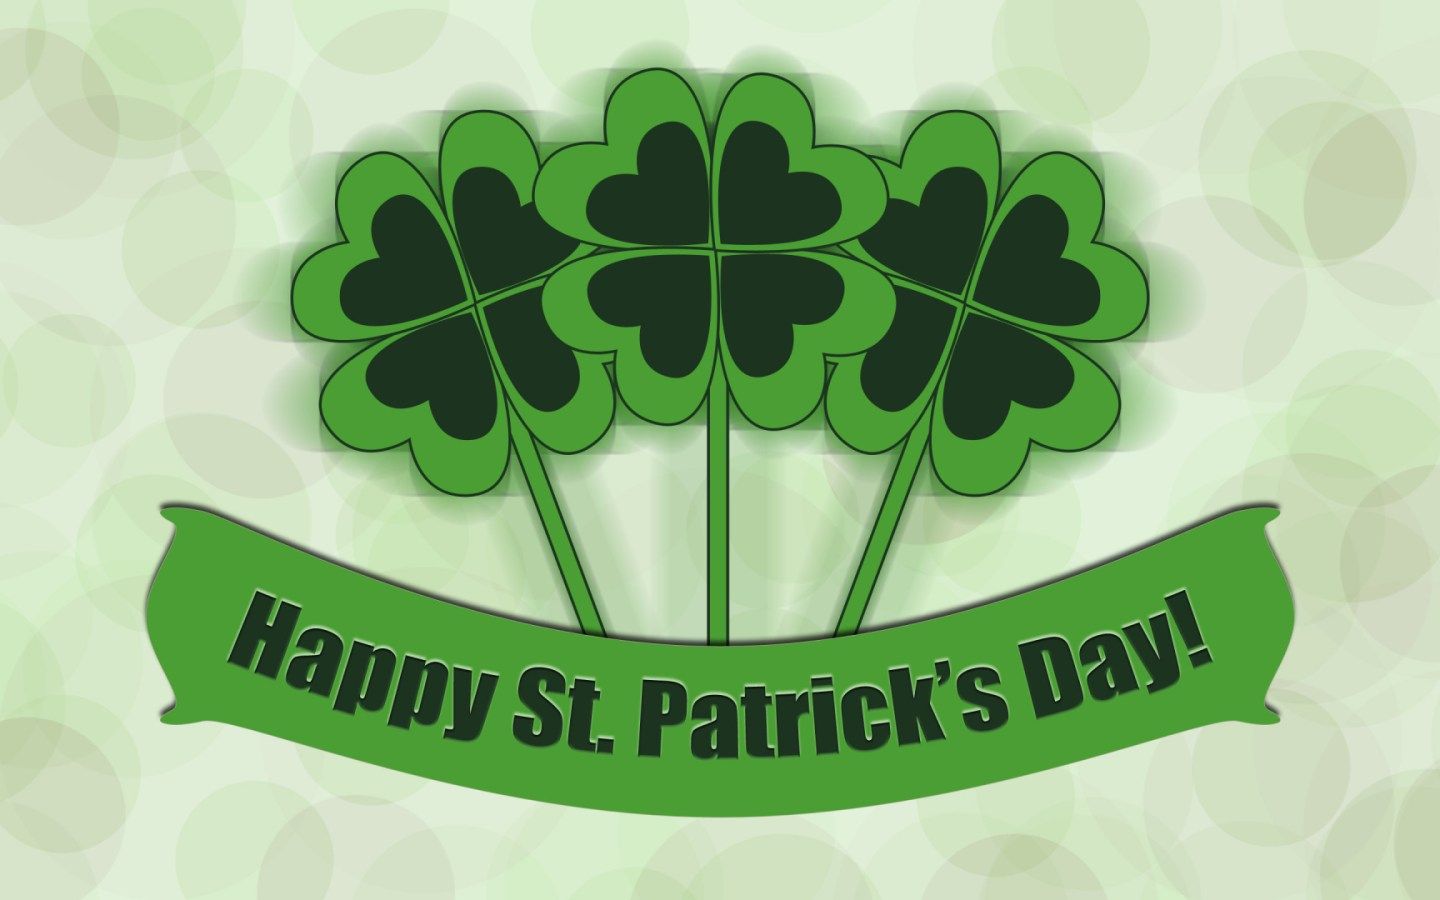 Four Leaf Clover, Saint Patrick's Day HD Wallpaper & Background